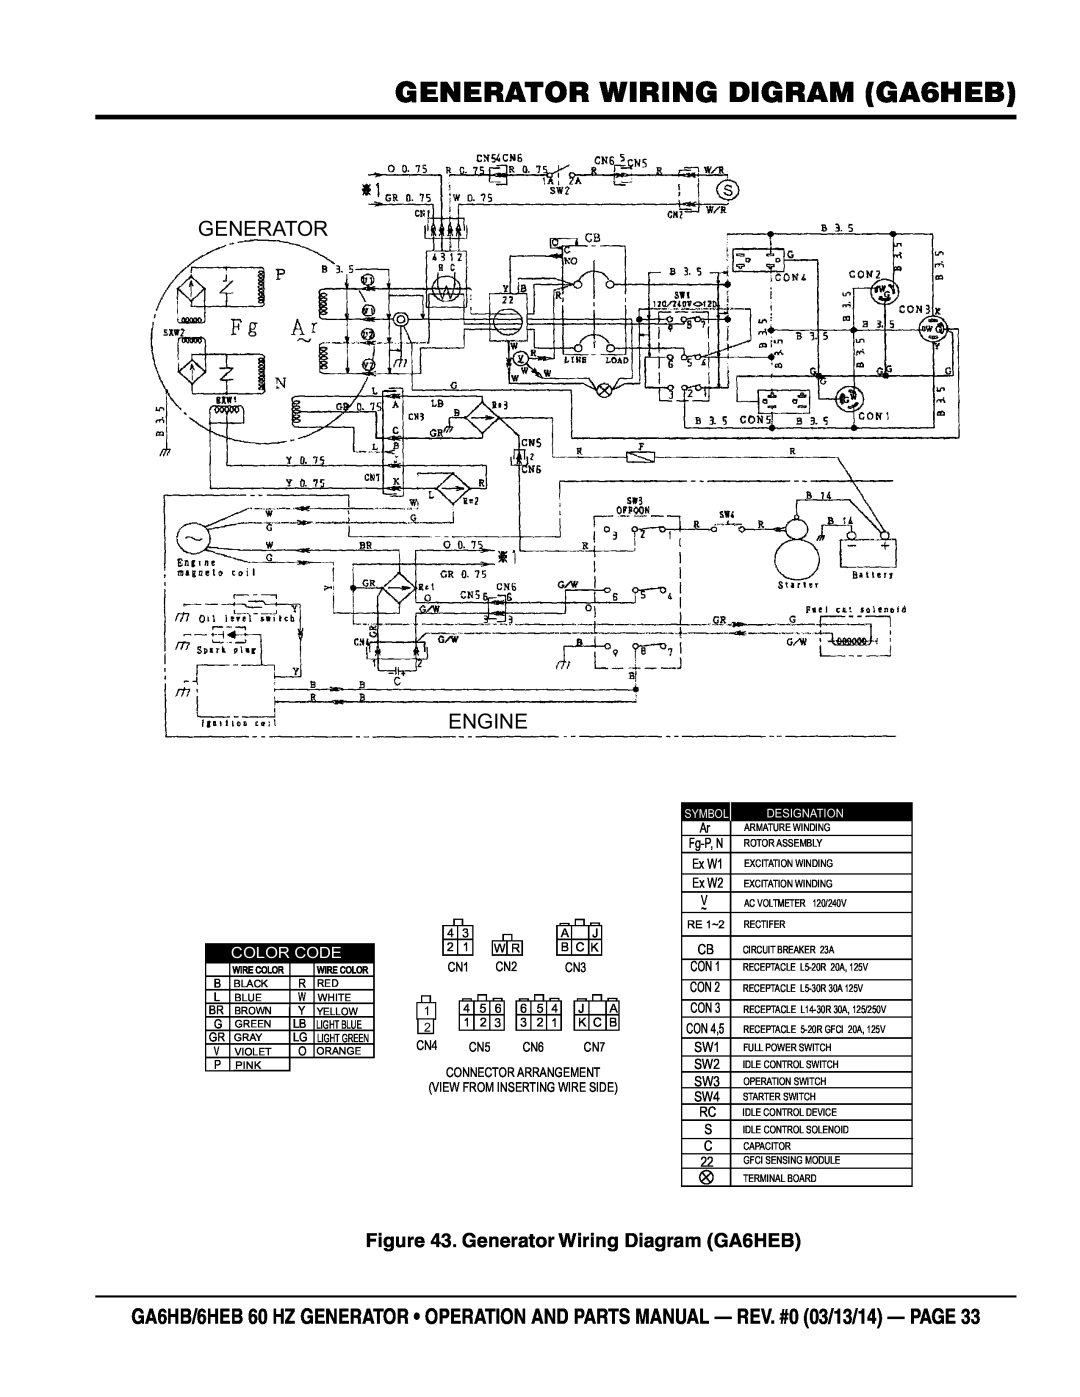 Multiquip ga6HB generator wiring digram ga6heb, Generator Engine, Generator Wiring Diagram GA6HEB, Color Code, Symbol 